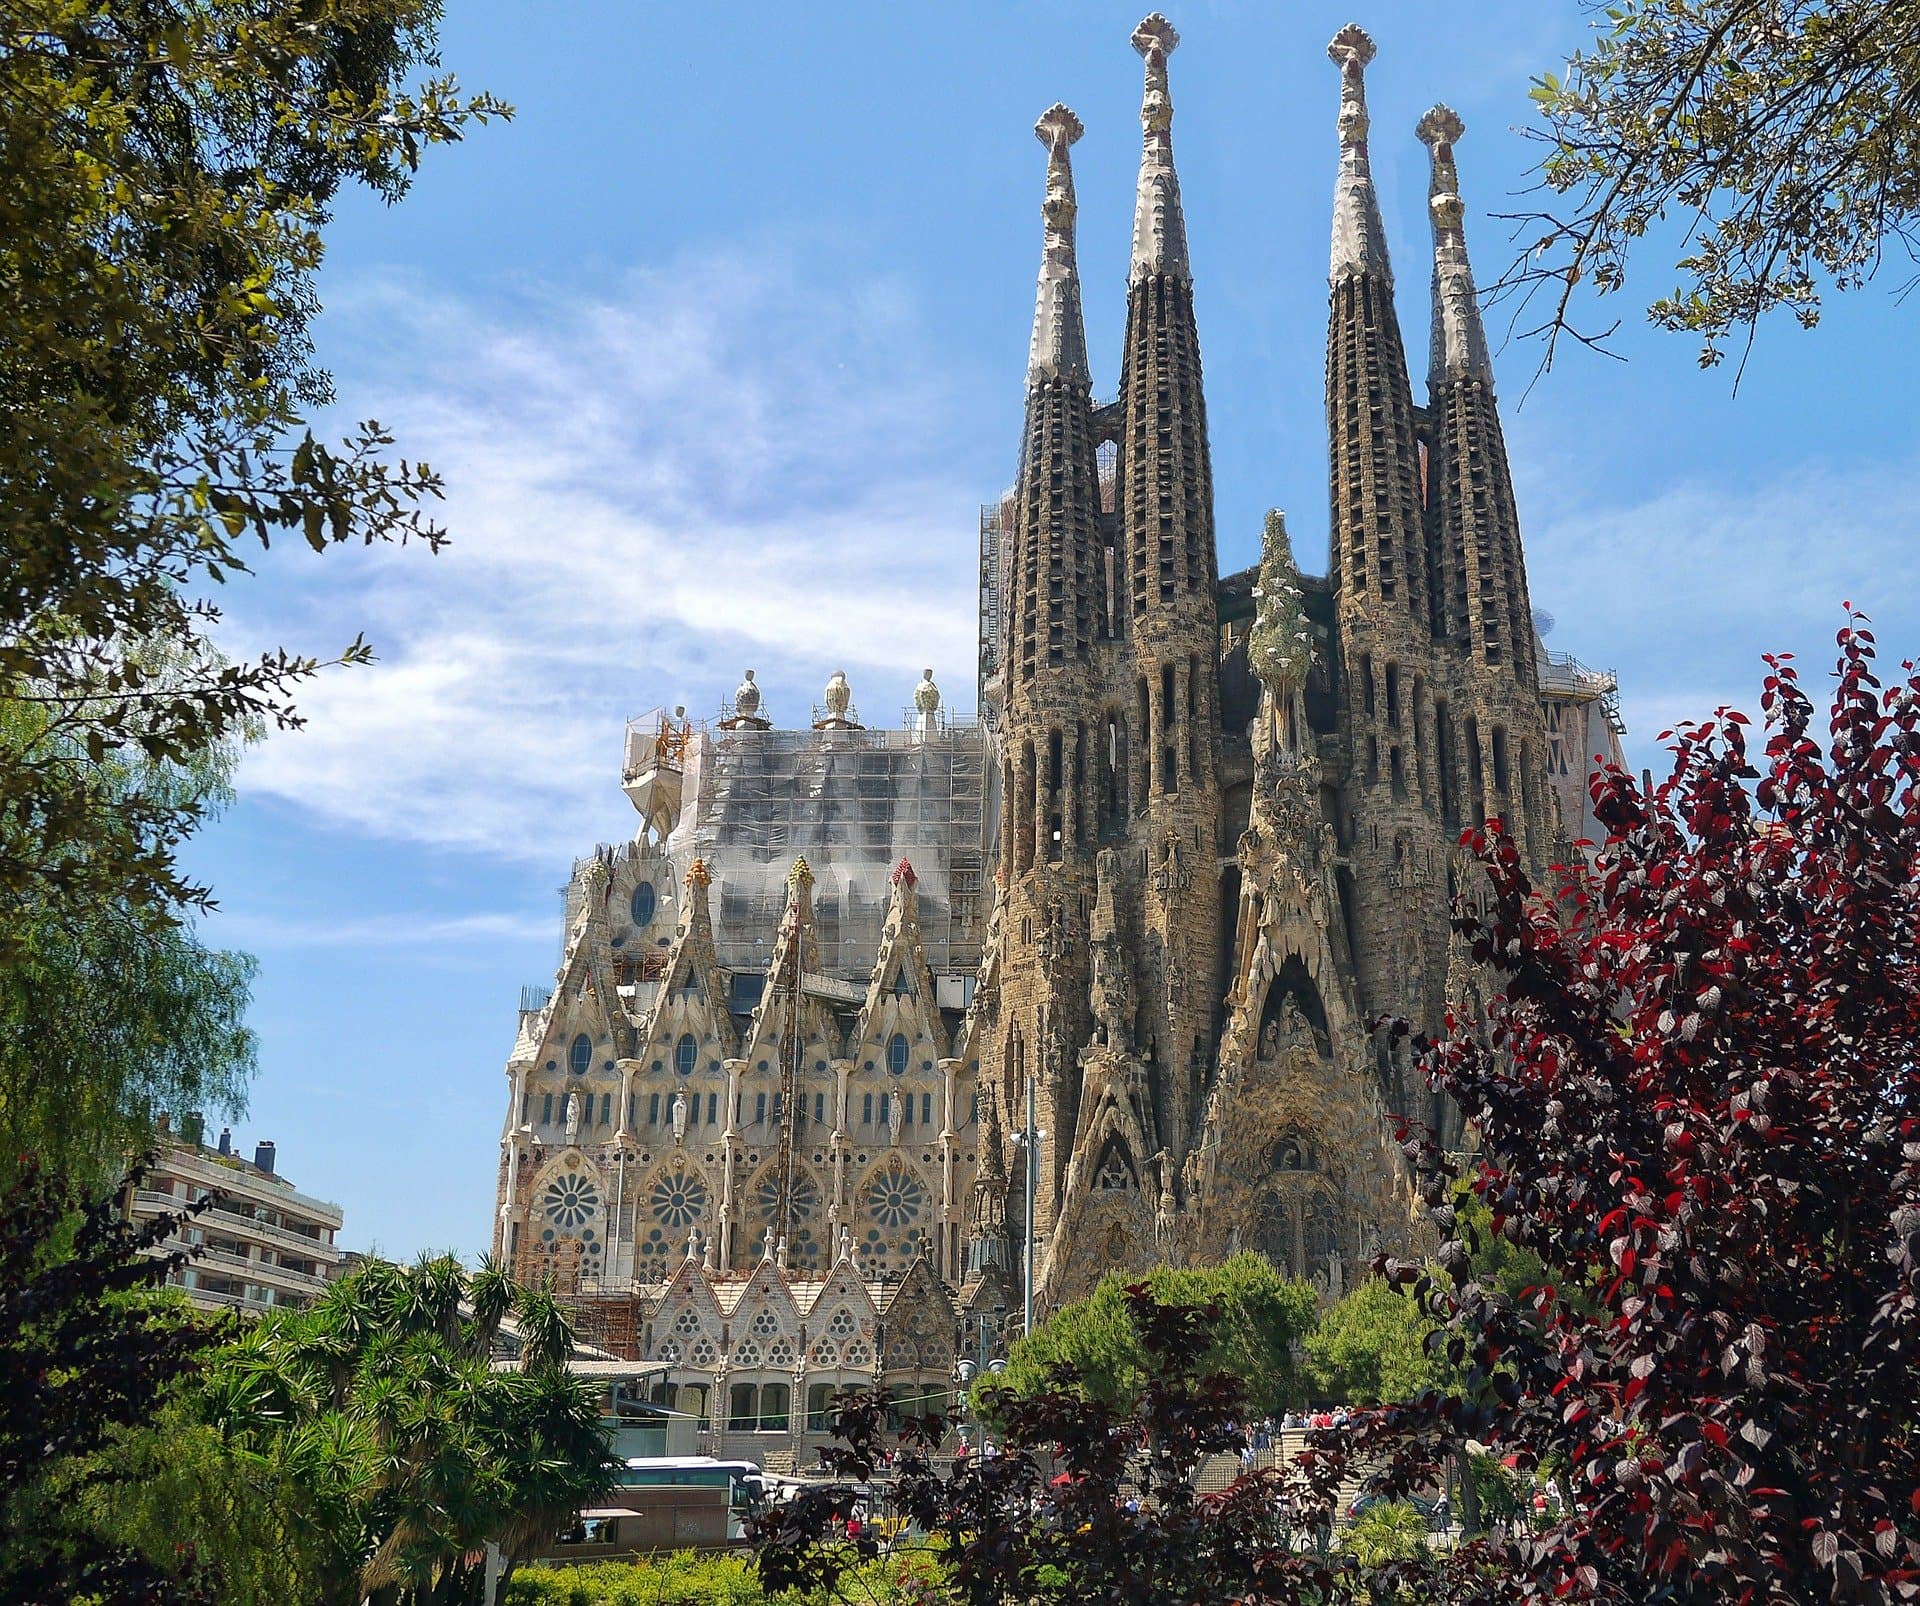 Facts about Sagrada Familia in Barcelona